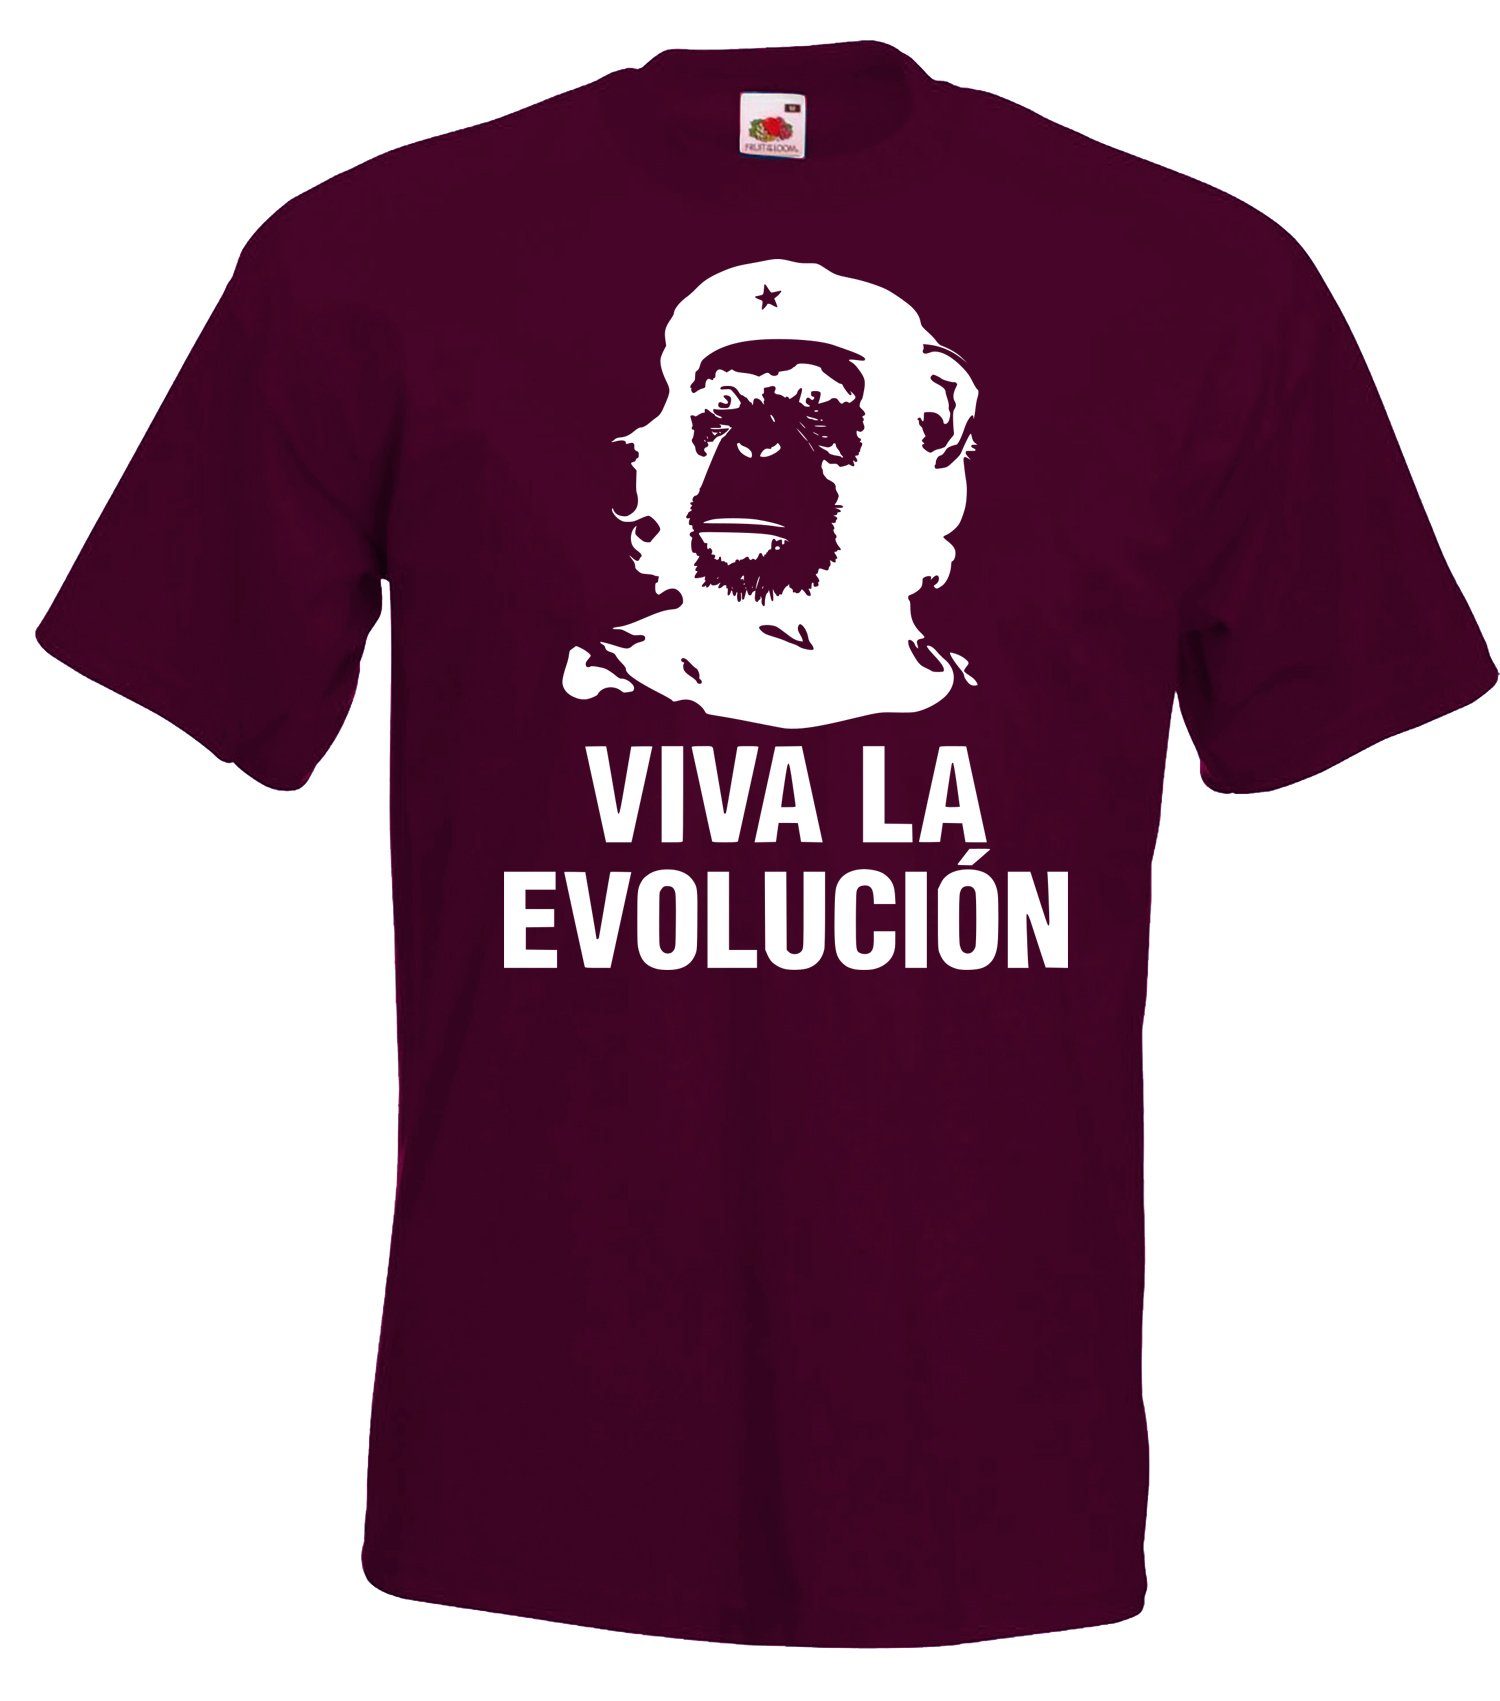 Youth Designz T-Shirt Viva la Evolucion Herren Fun T-Shirt mit trendigem Frontdruck Burgundy